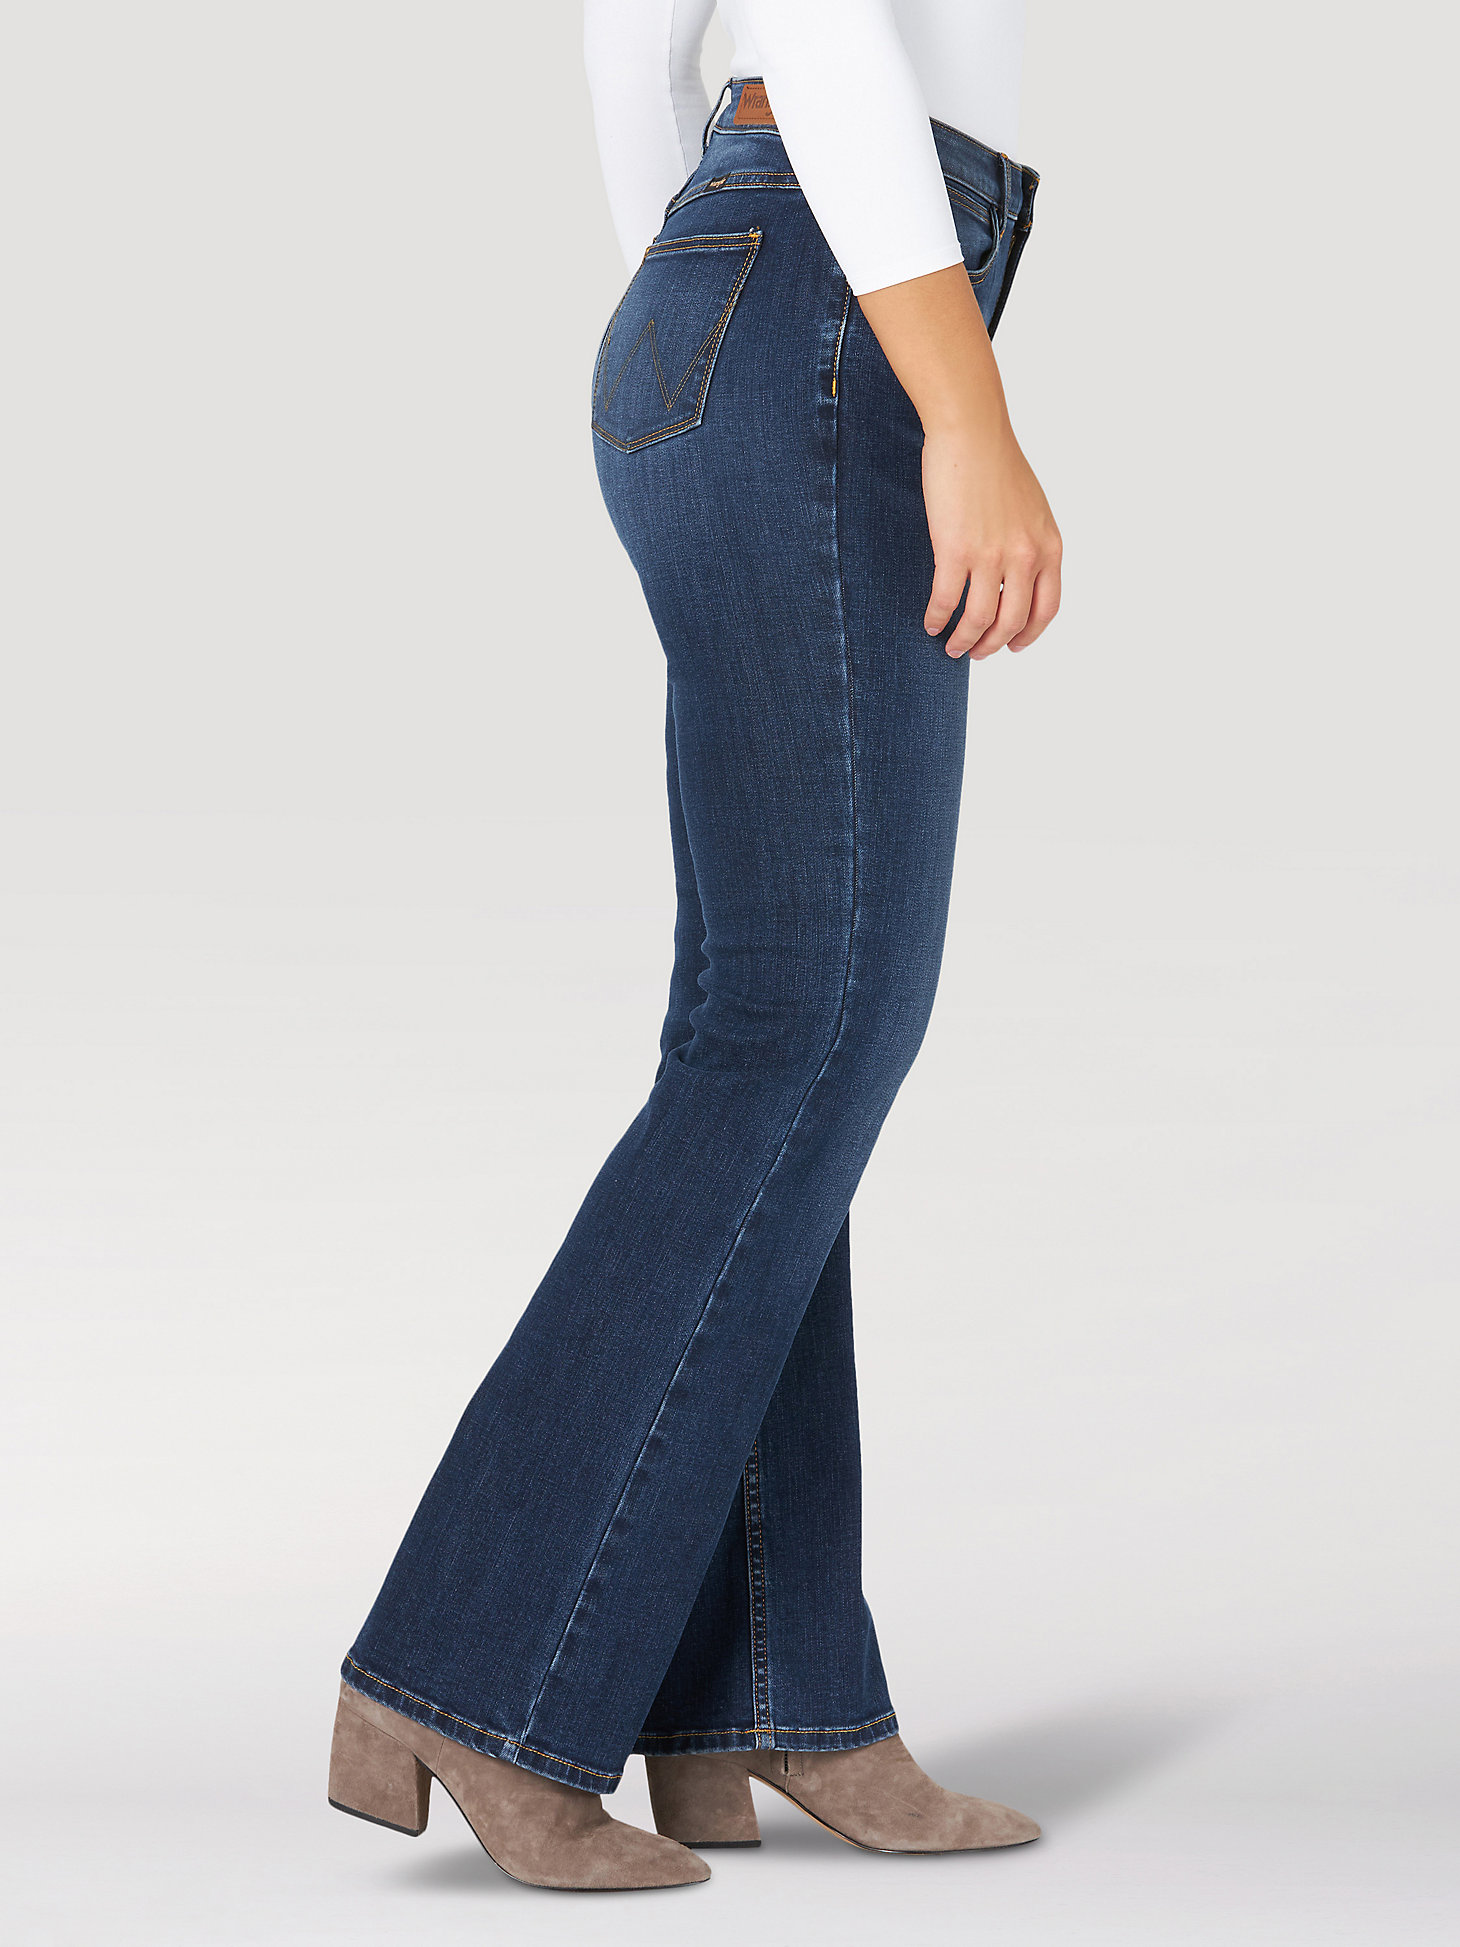 Women's Wrangler® High Rise True Straight Leg Jean in Stockton alternative view 2